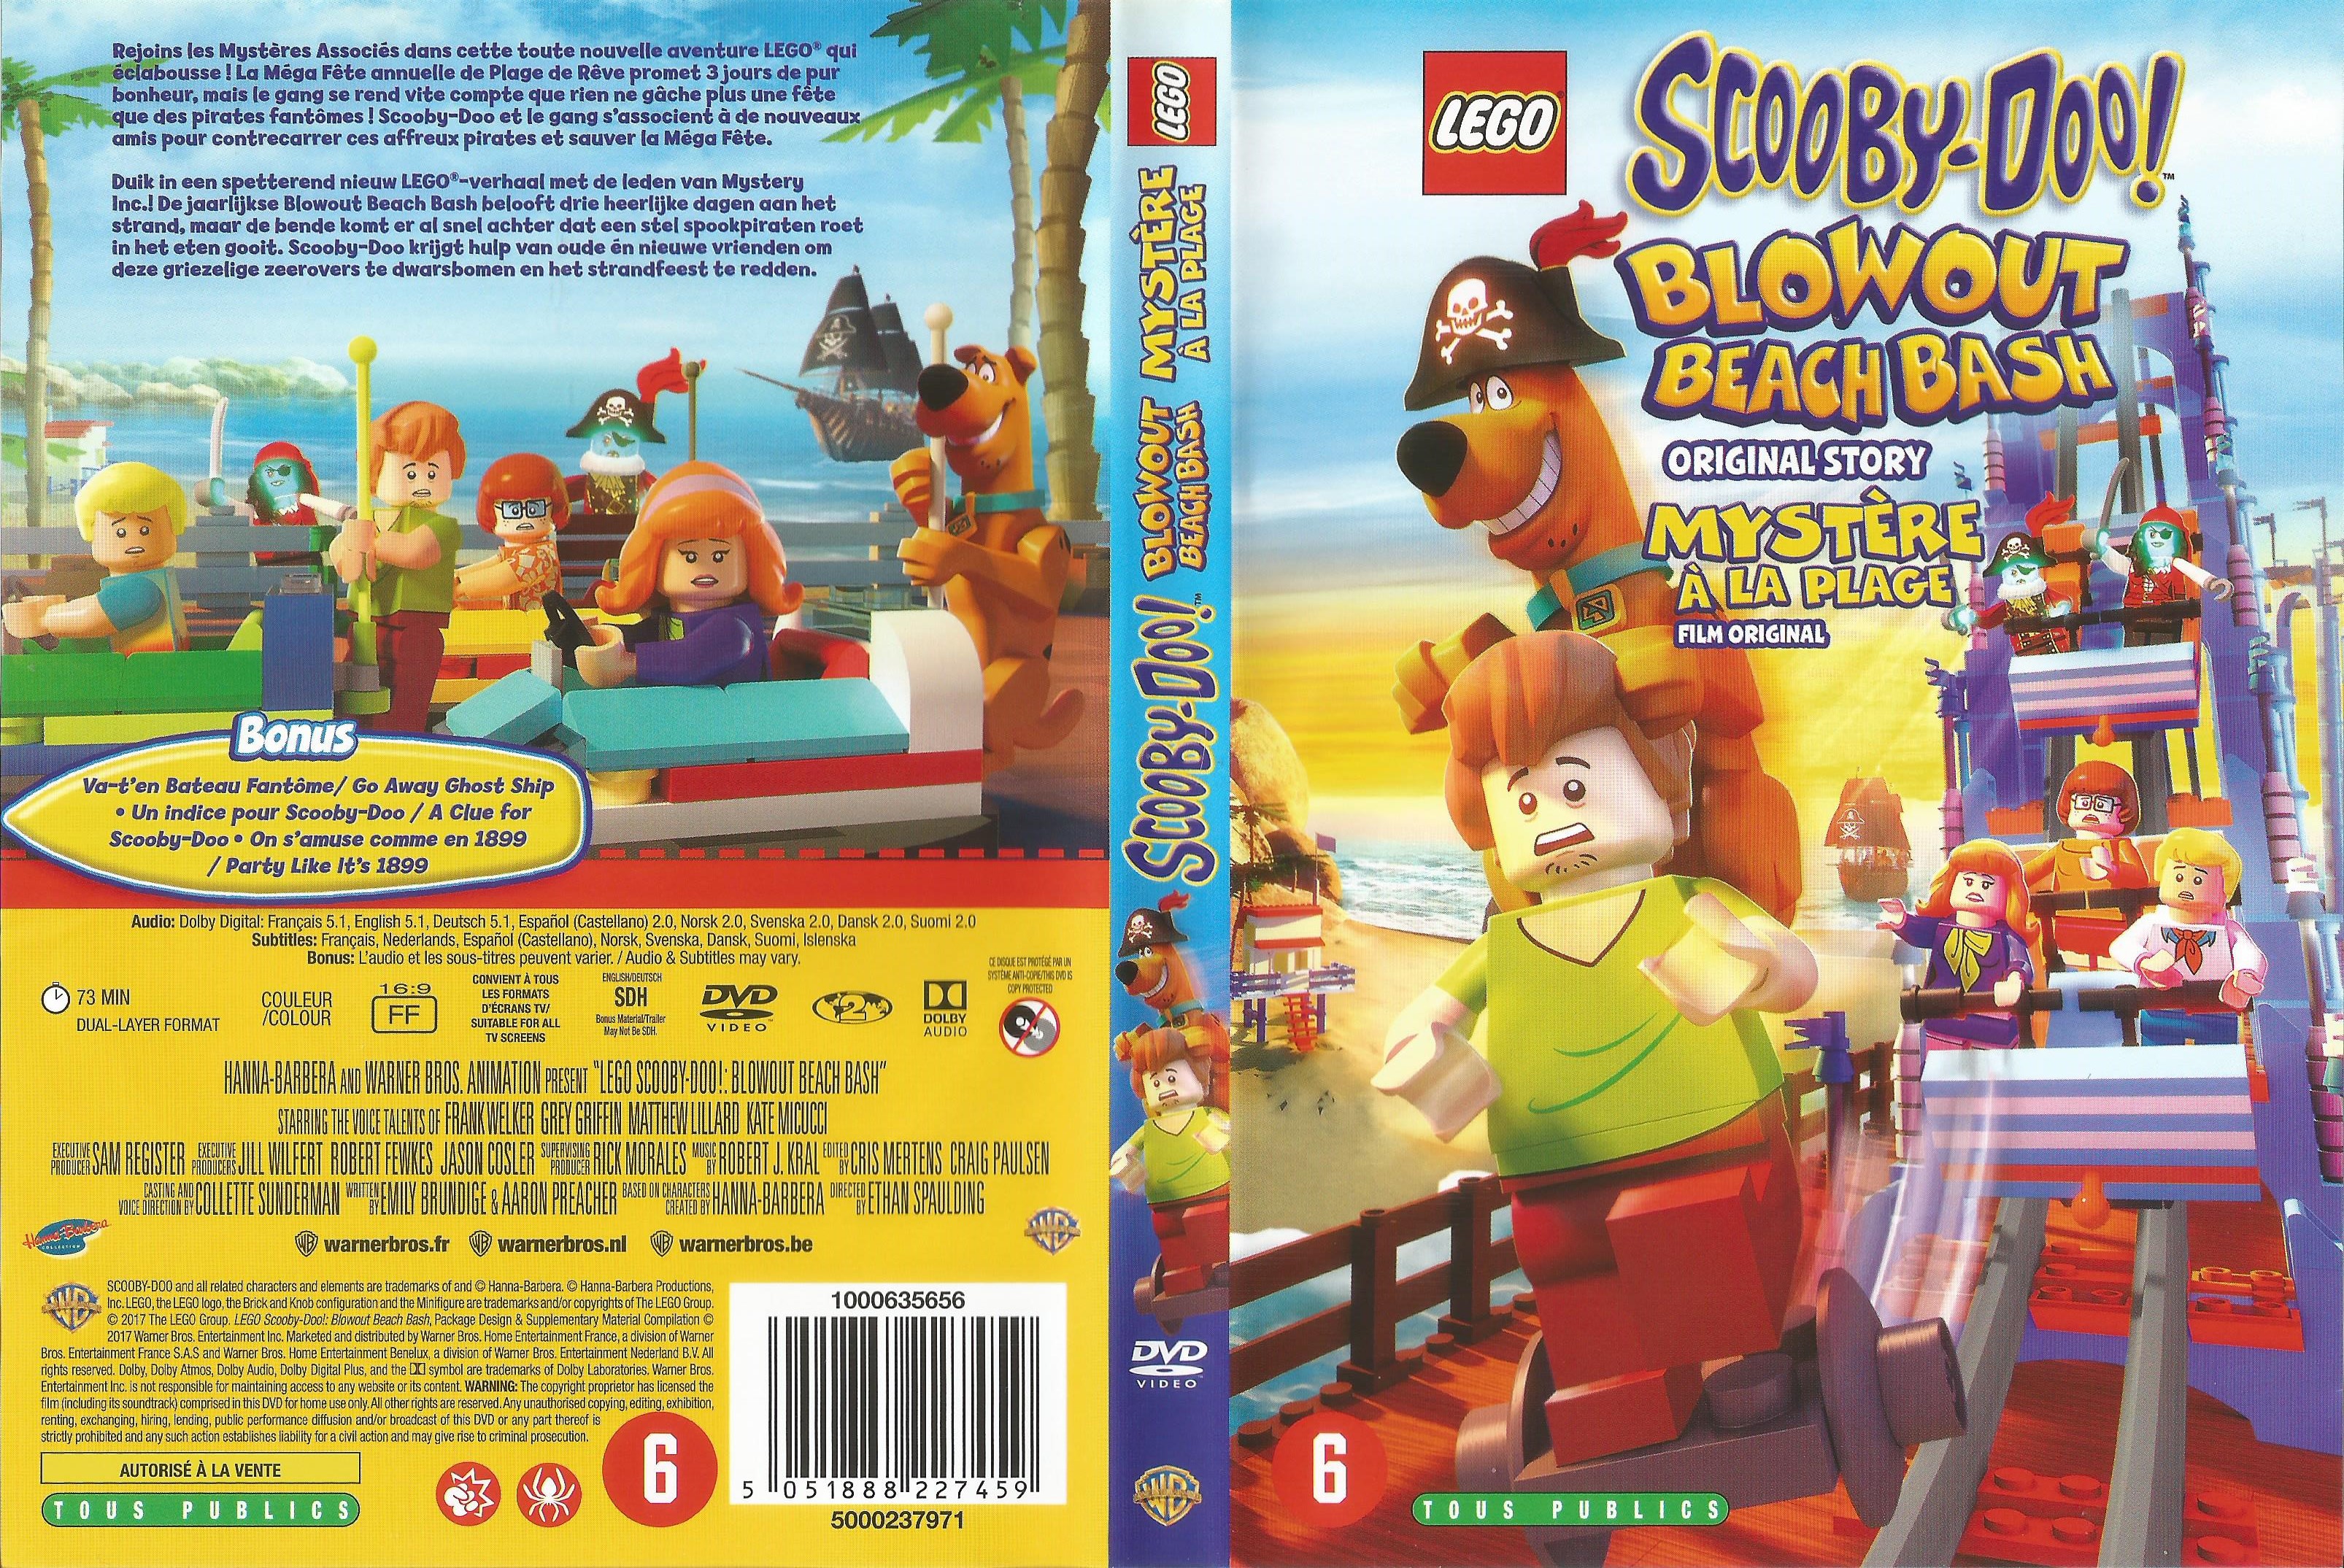 Jaquette DVD Lego Scooby-doo Mystre a la plage